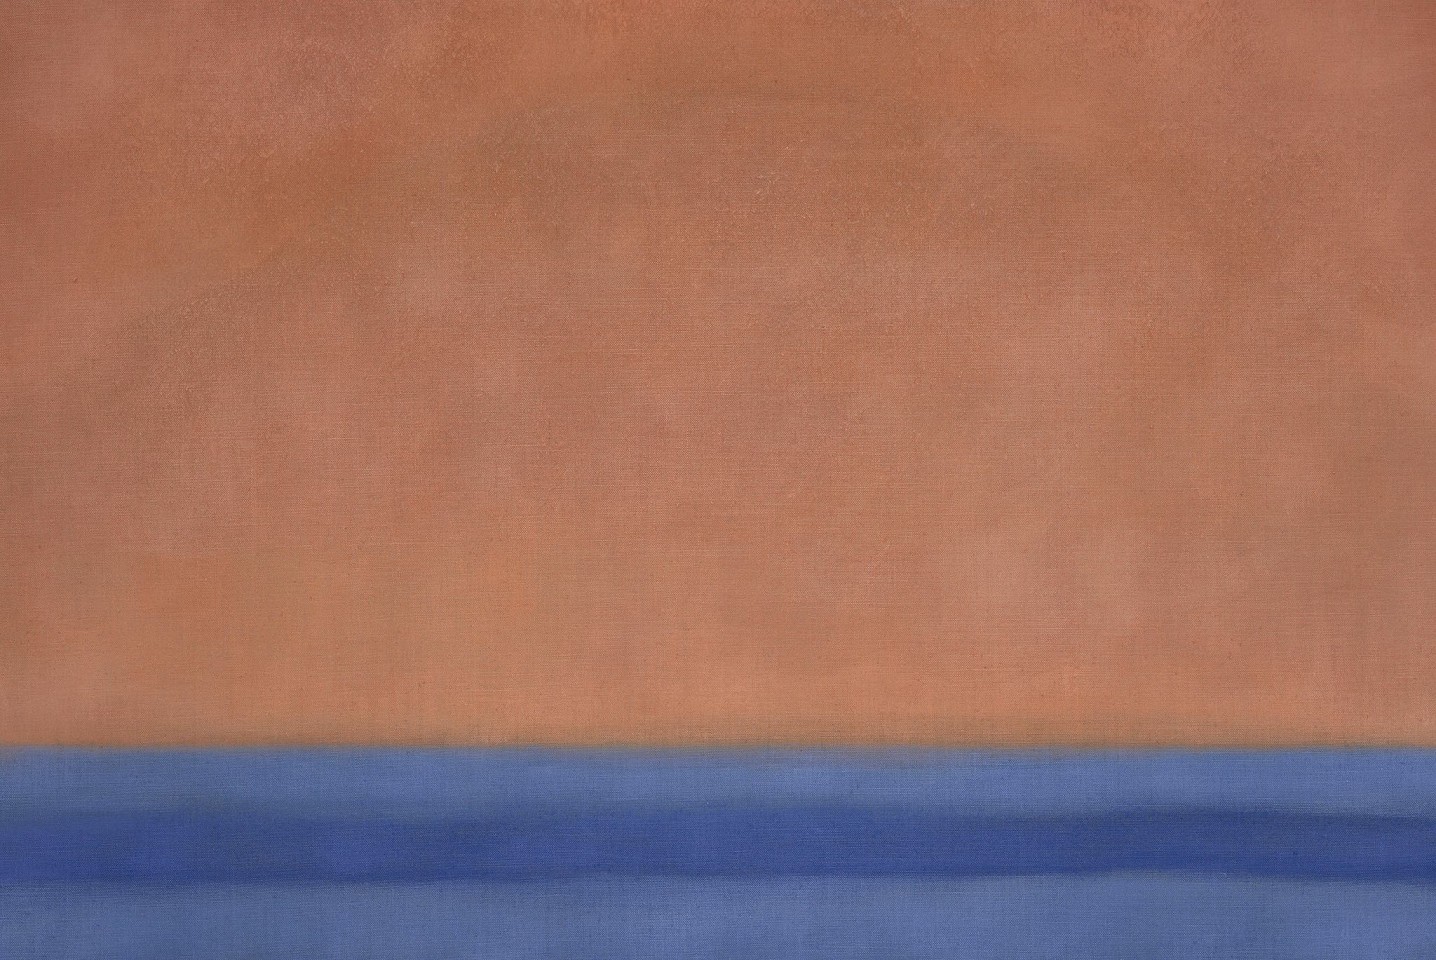 Susan Vecsey, Untitled (Atomic Orange/Blue) | SOLD, 2020
Oil on linen, 42 x 62 in. (106.7 x 157.5 cm)
VEC-00213